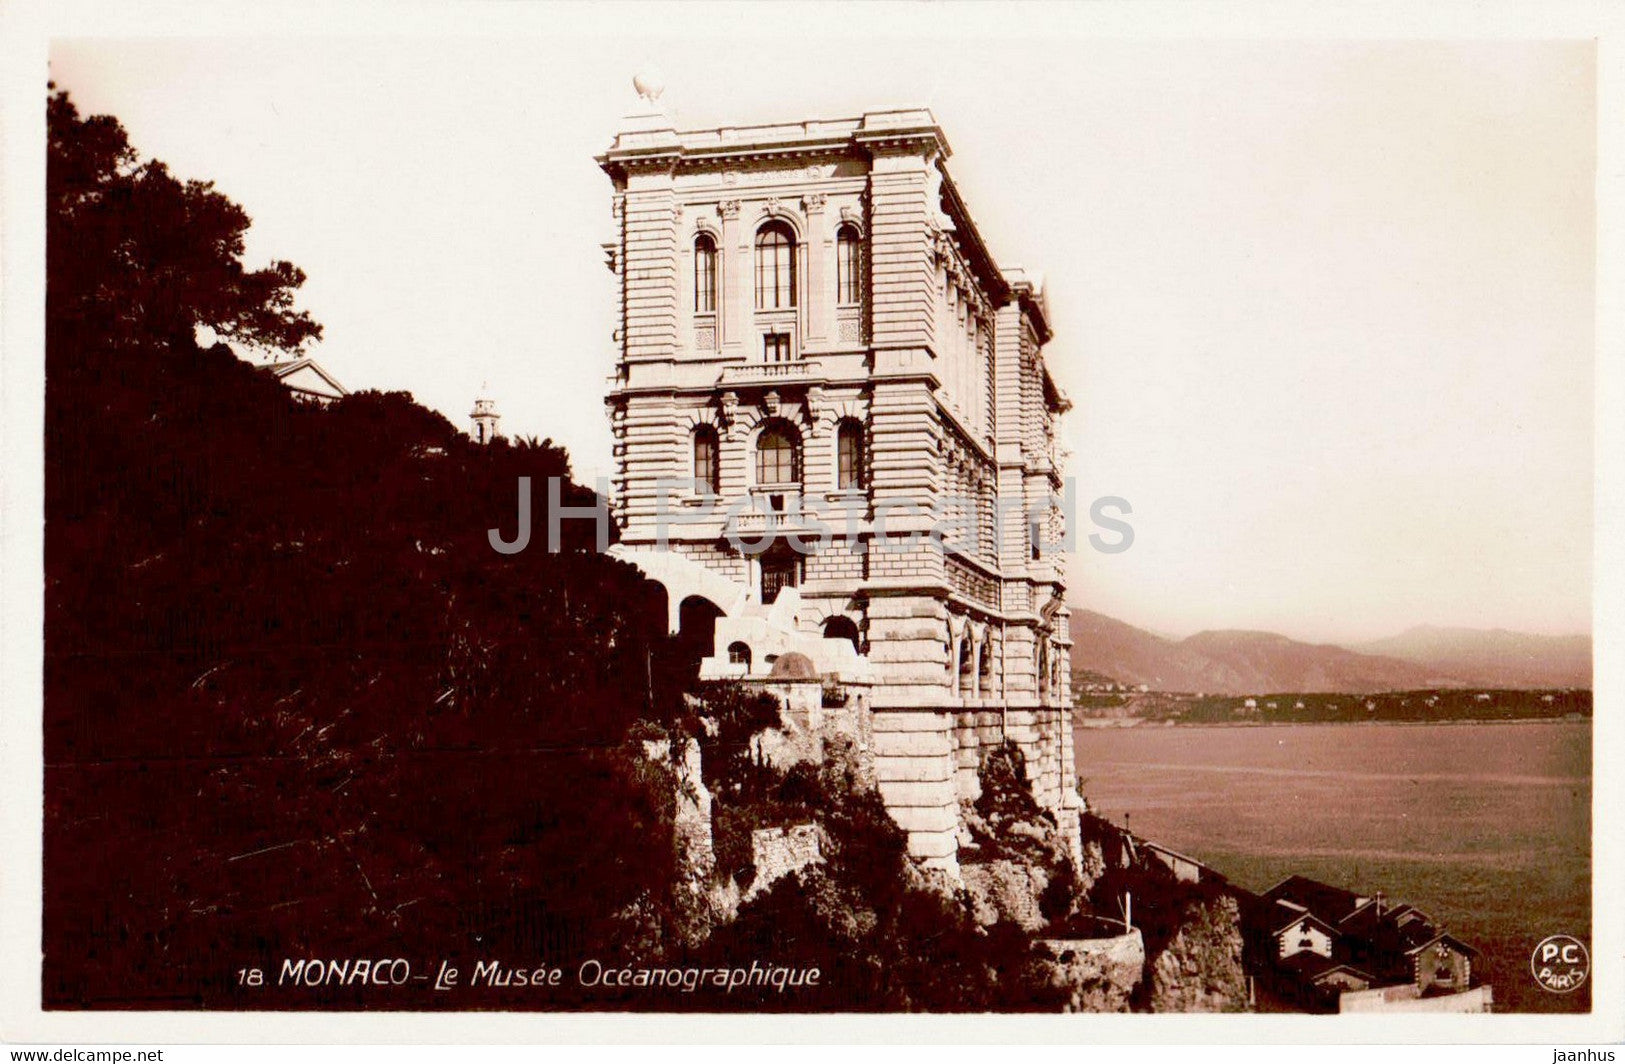 Monaco - Le Musee Oceanographique - museum - 18 - old postcard - Monaco - unused - JH Postcards